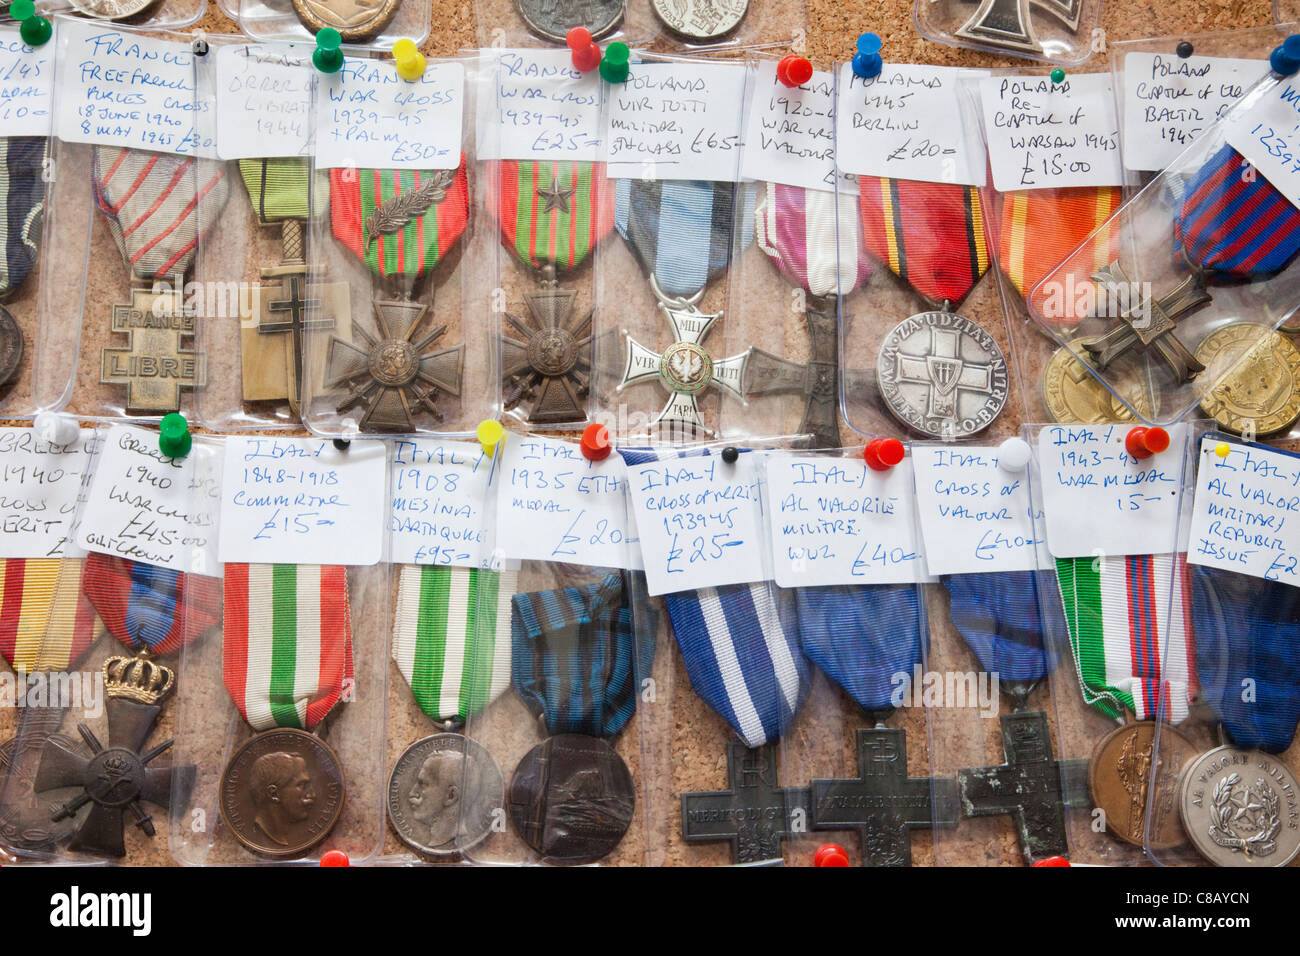 England, London, Sammler Shop Schaufenster der Krieg Medaillen Stockfoto